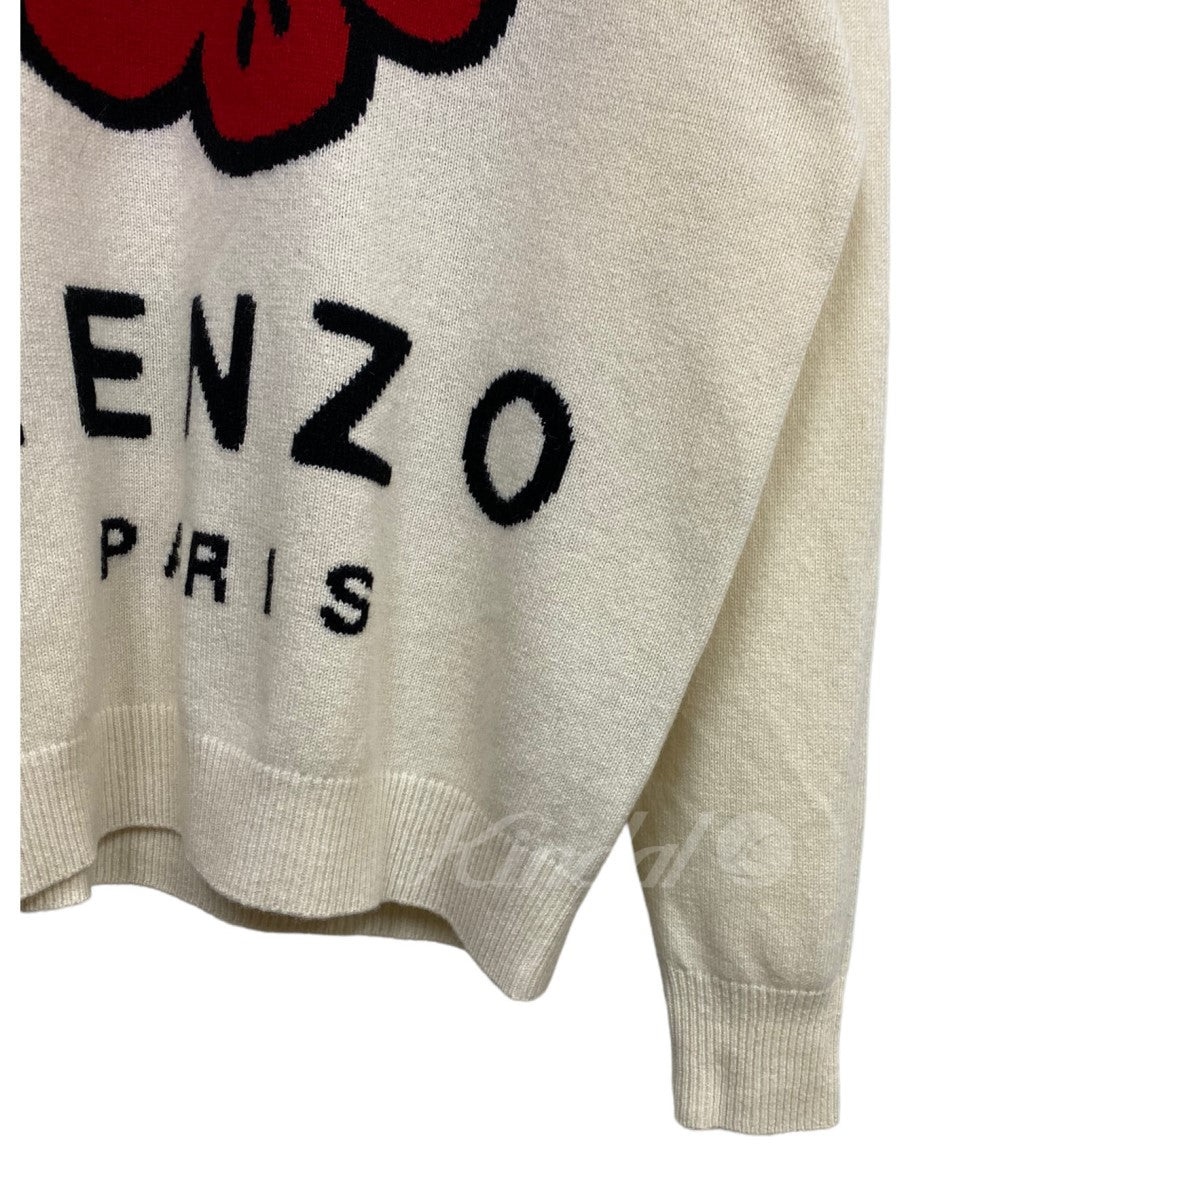 KENZO by NIGO(ケンゾー ニゴー) BOKE FLOWER JUMPERボケフラワーウールニットセーター